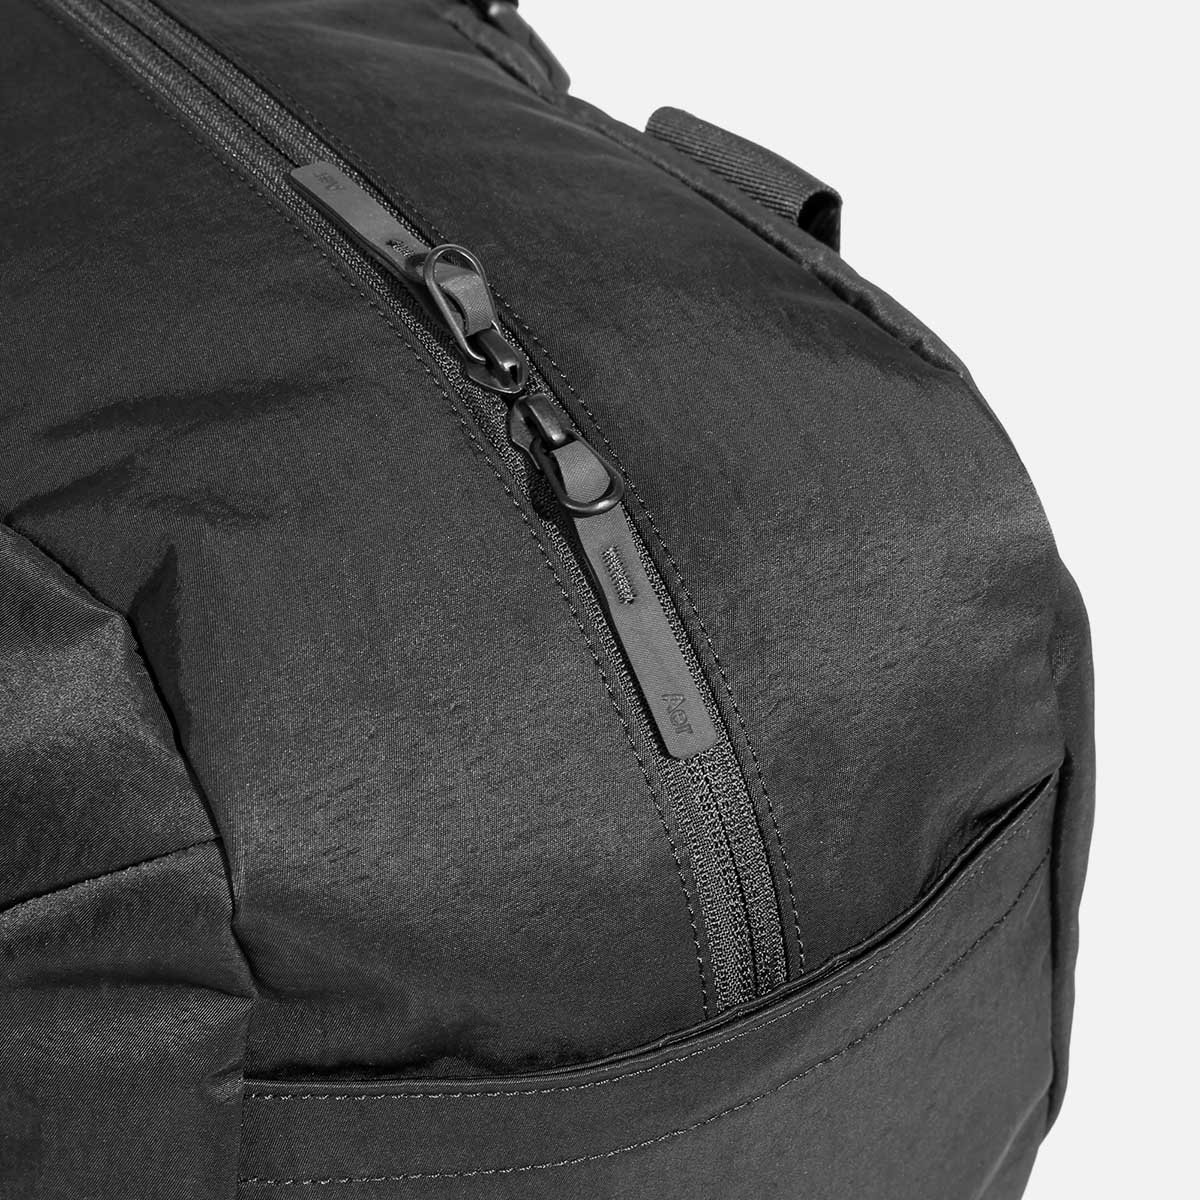 Go Duffel 2 - Black — Aer | Modern gym bags, travel backpacks and ...